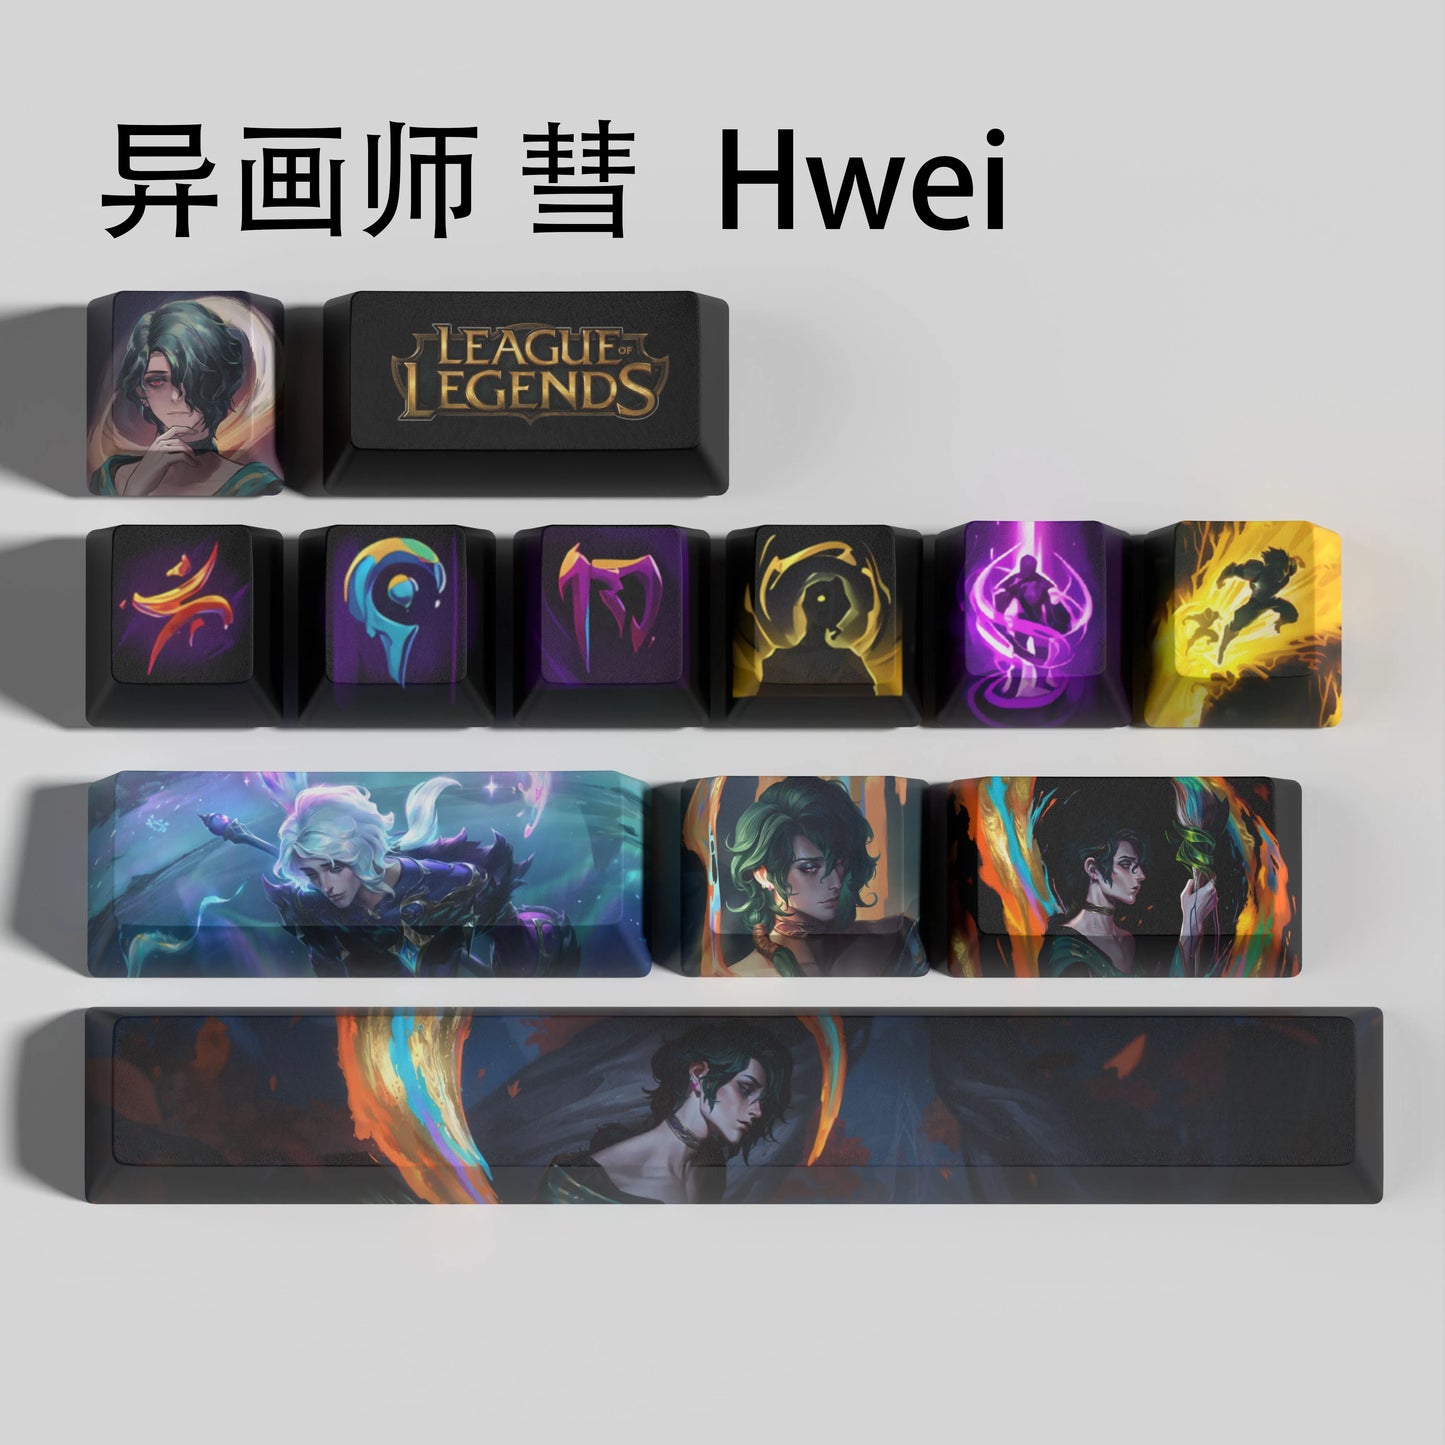 Hwei keycaps